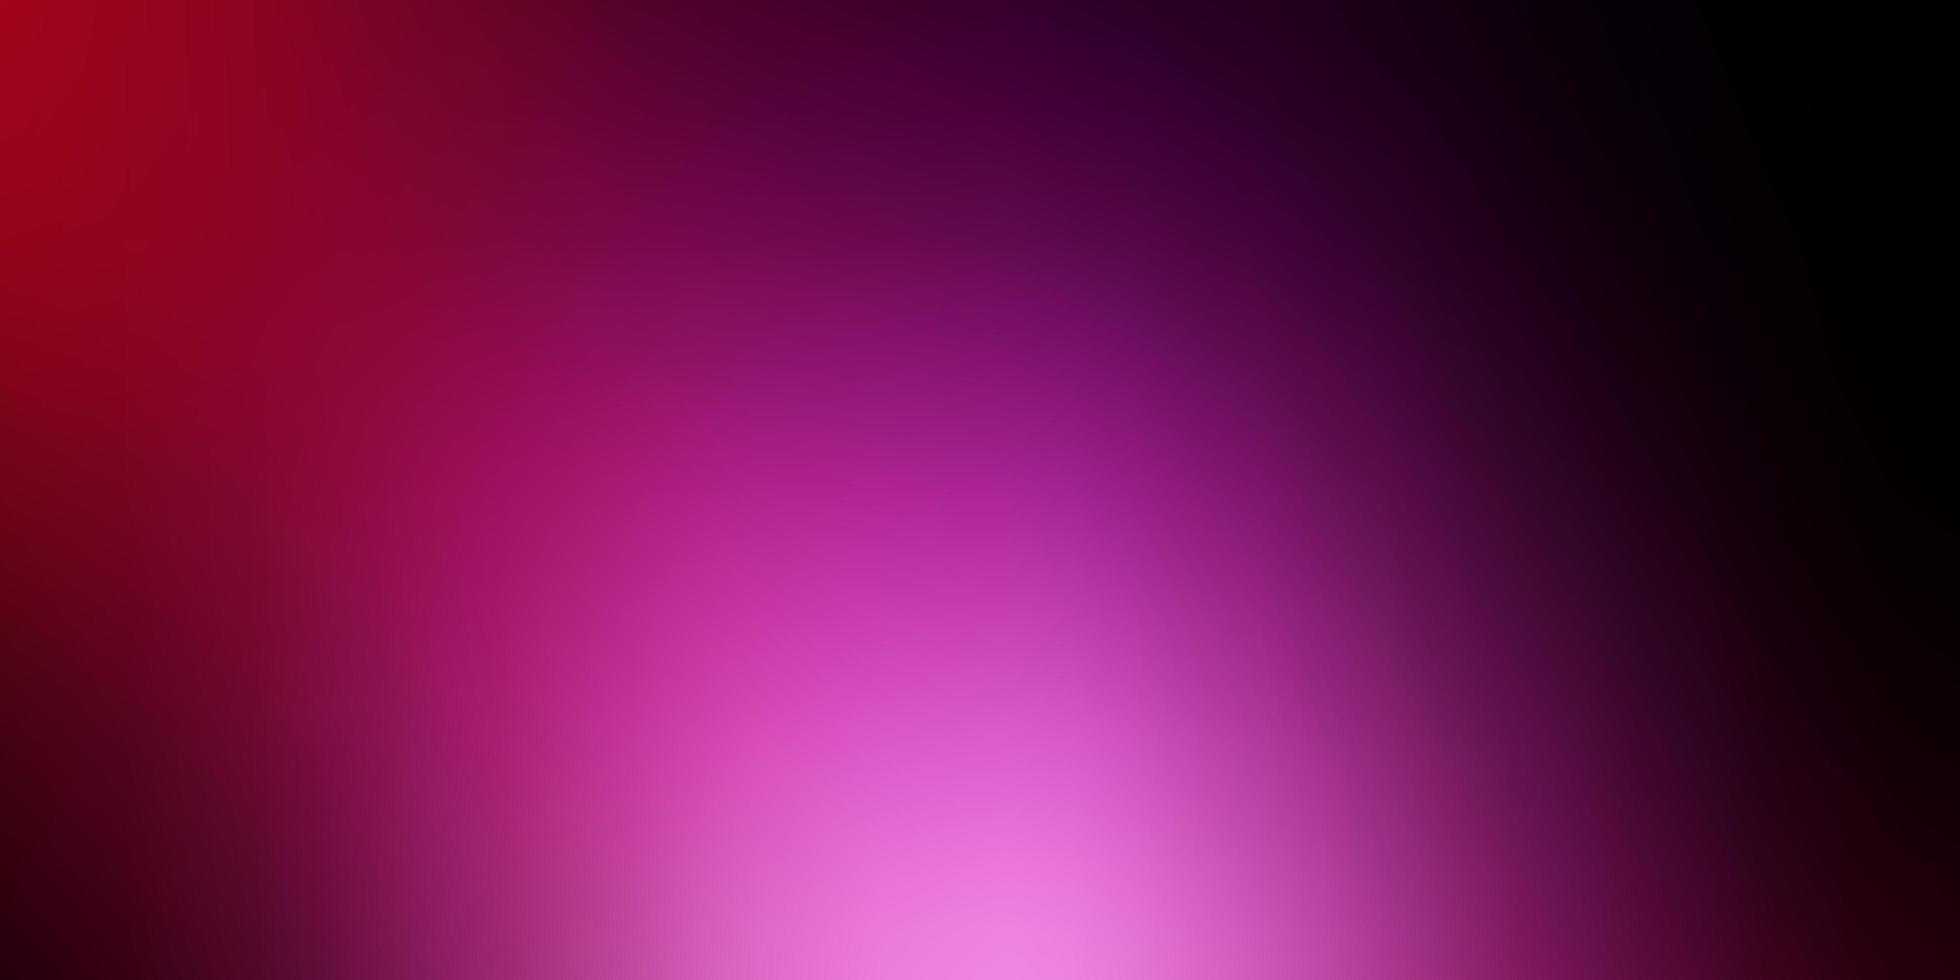 Fondo borroso abstracto del vector púrpura, rosado oscuro.